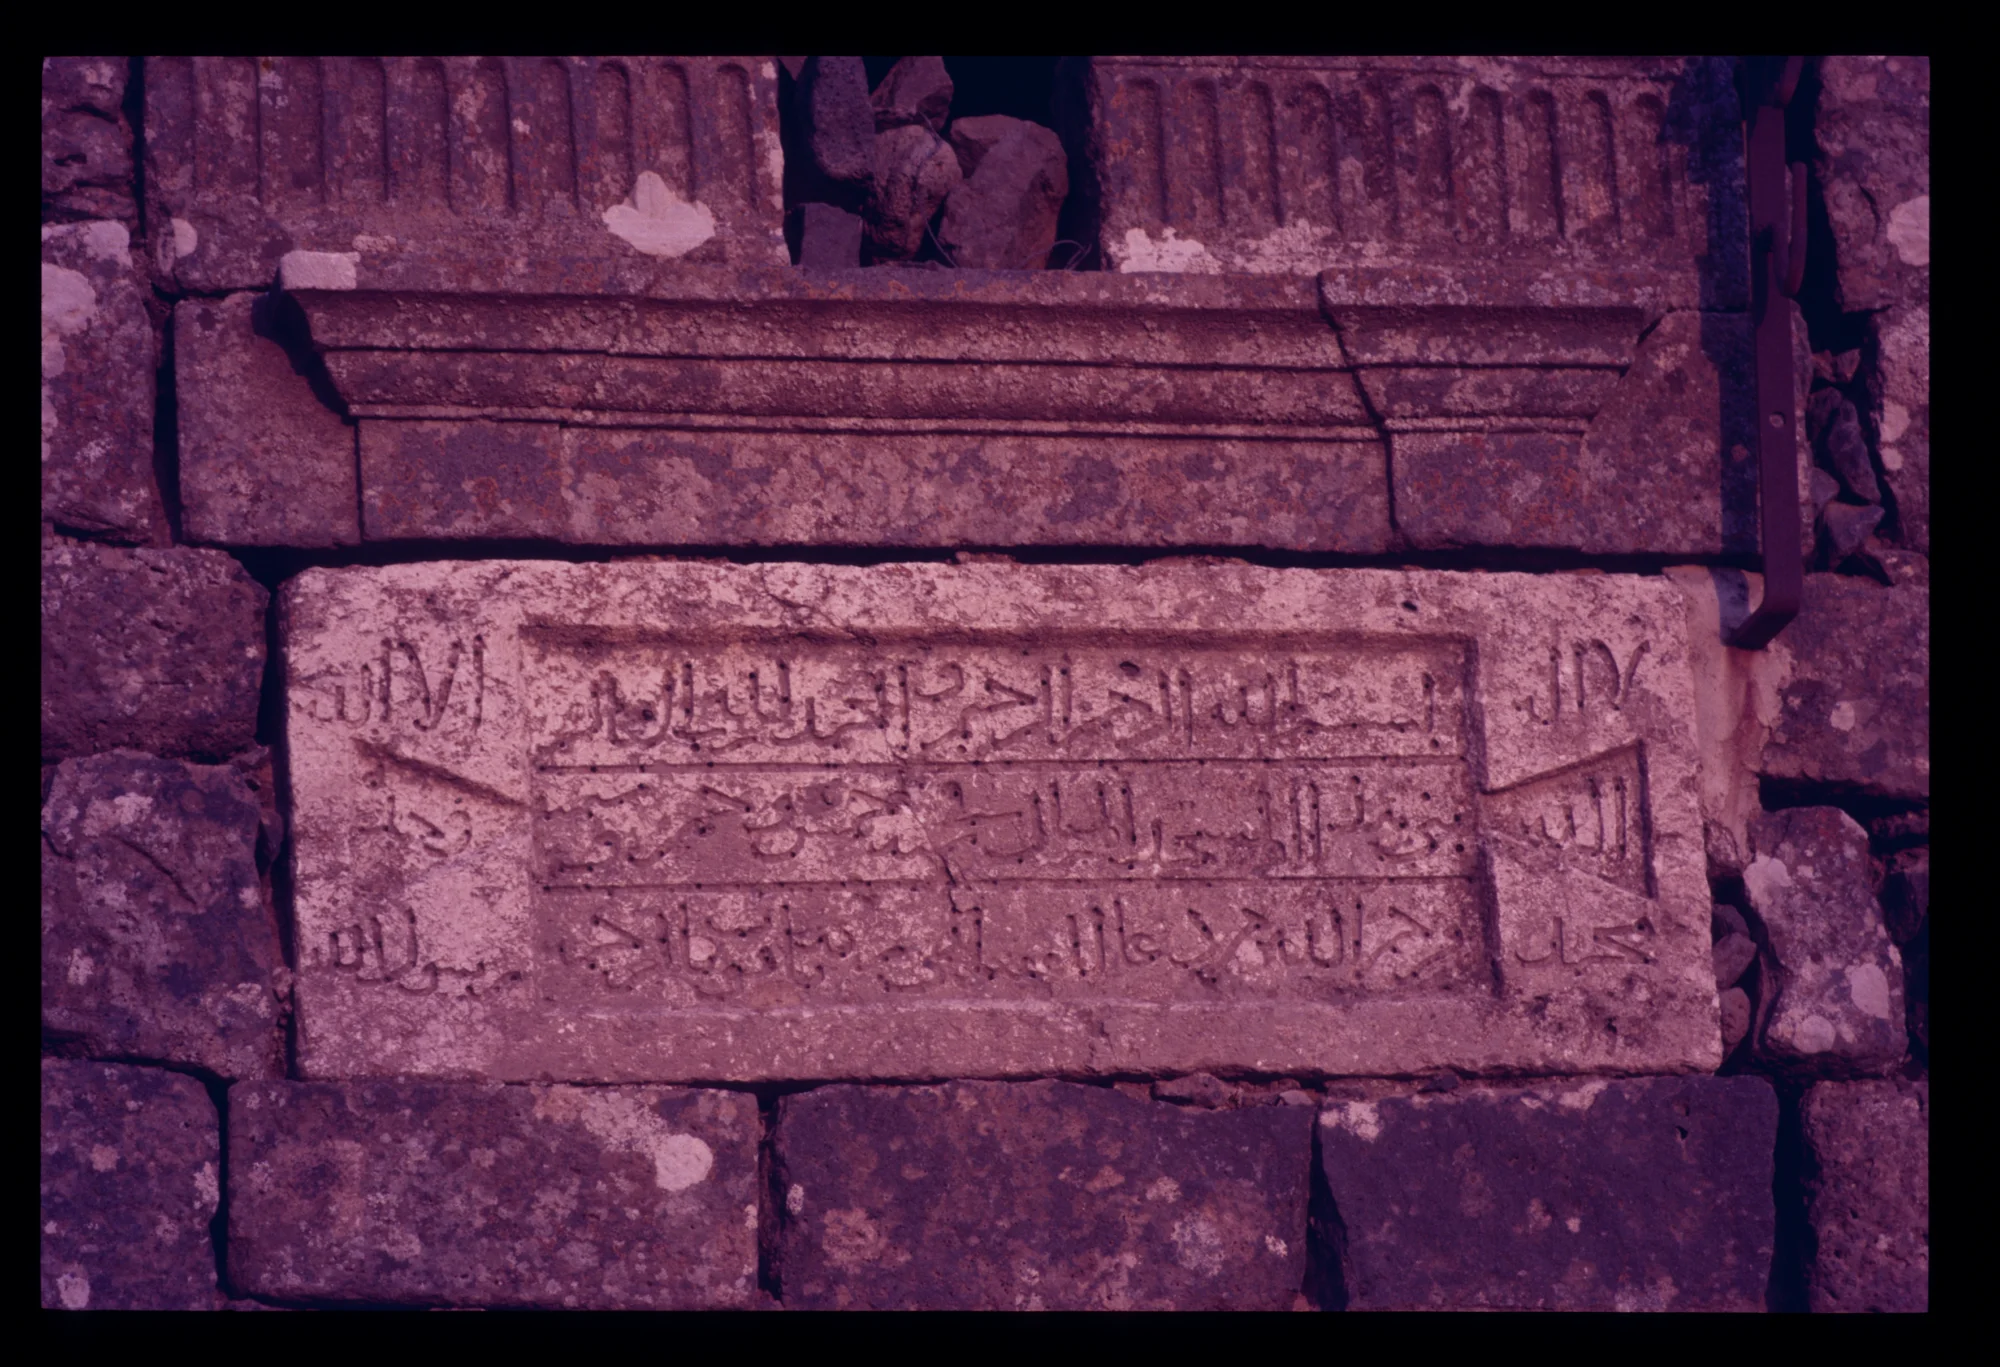 Busra - Masjid Yaqut (mosque) - founding inscription